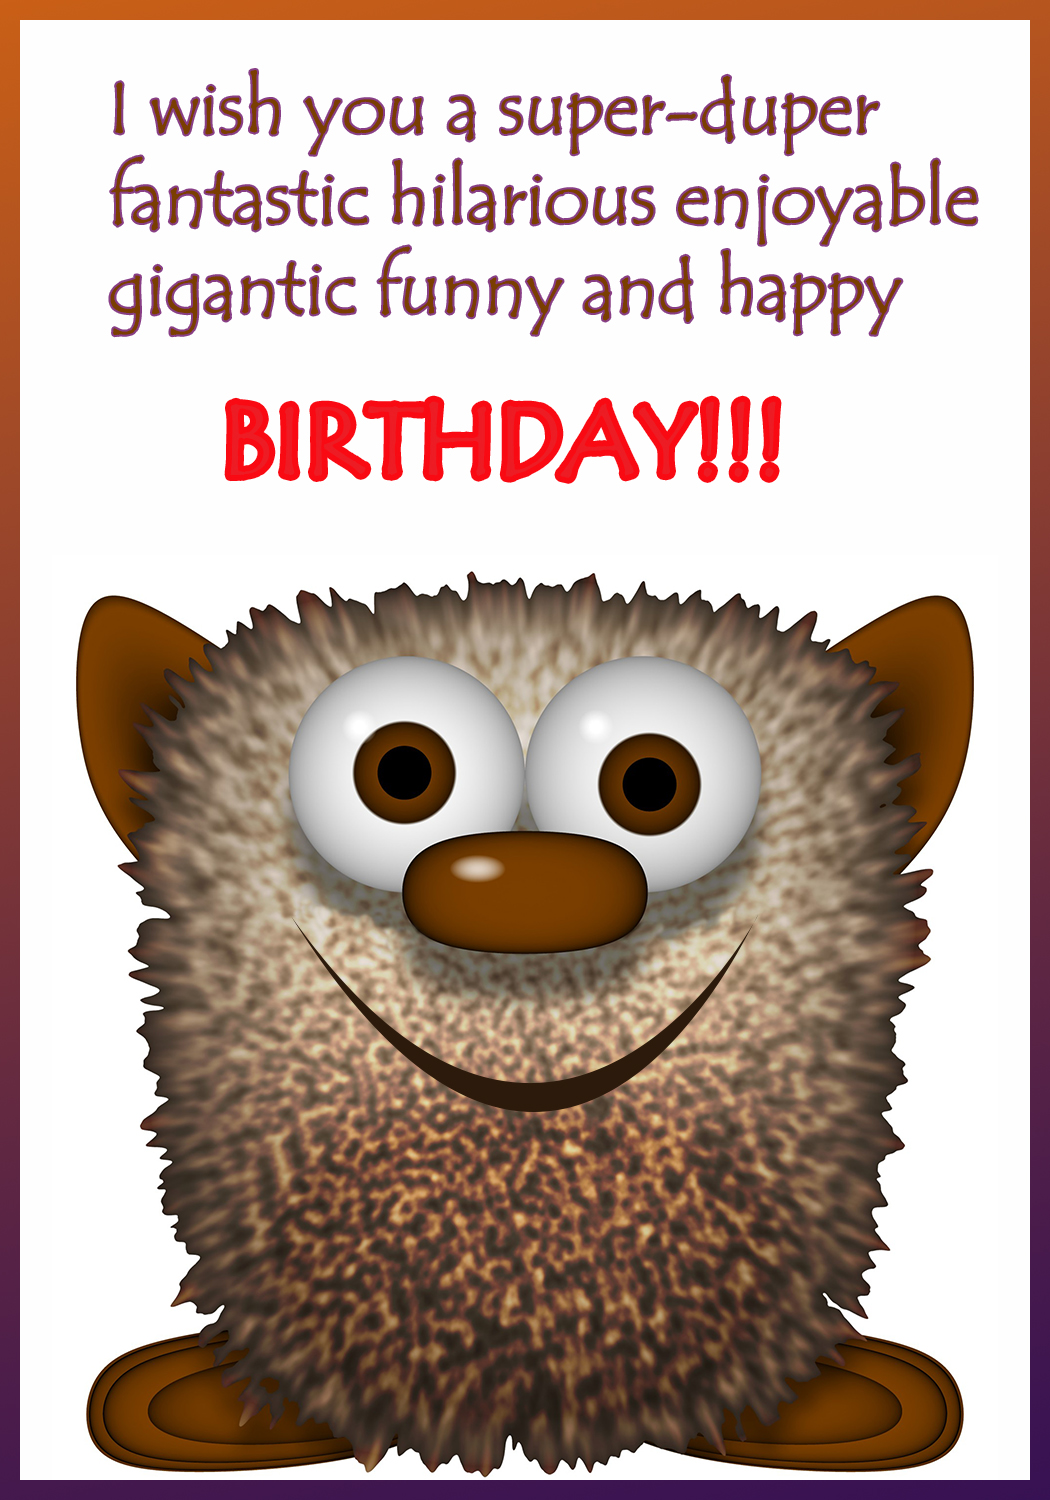 Funny Printable Birthday Cards Funny Printable Birthday Cards Funny Birthday Card Printable